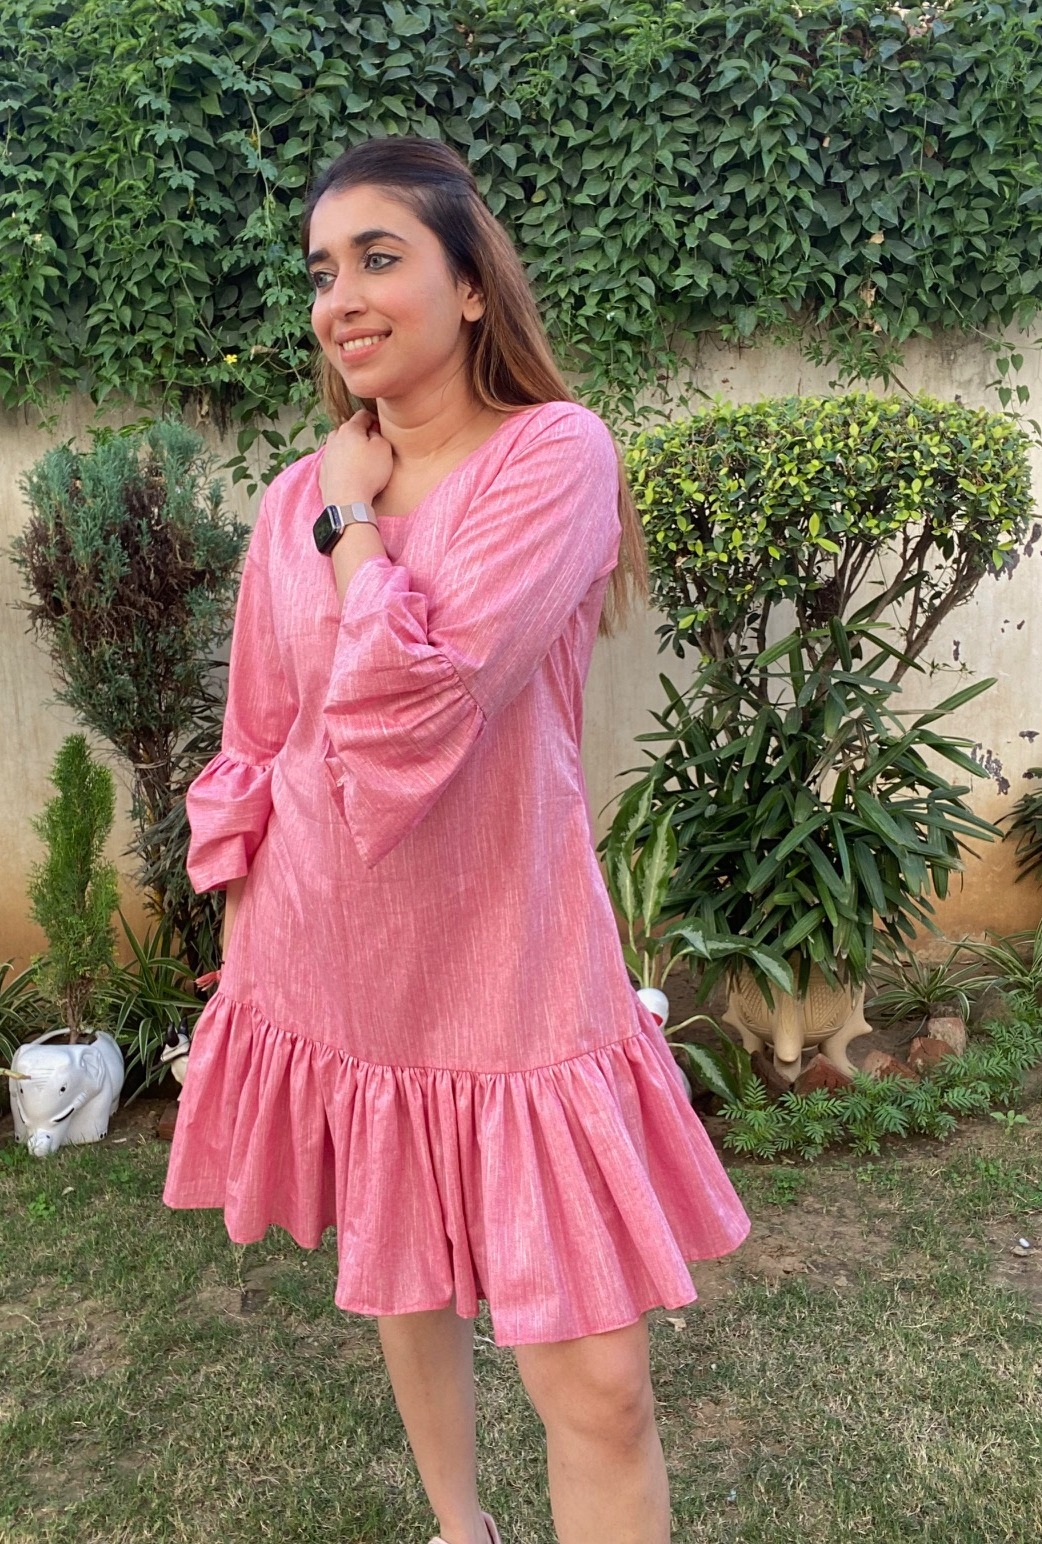 The pink monochromatic dress.